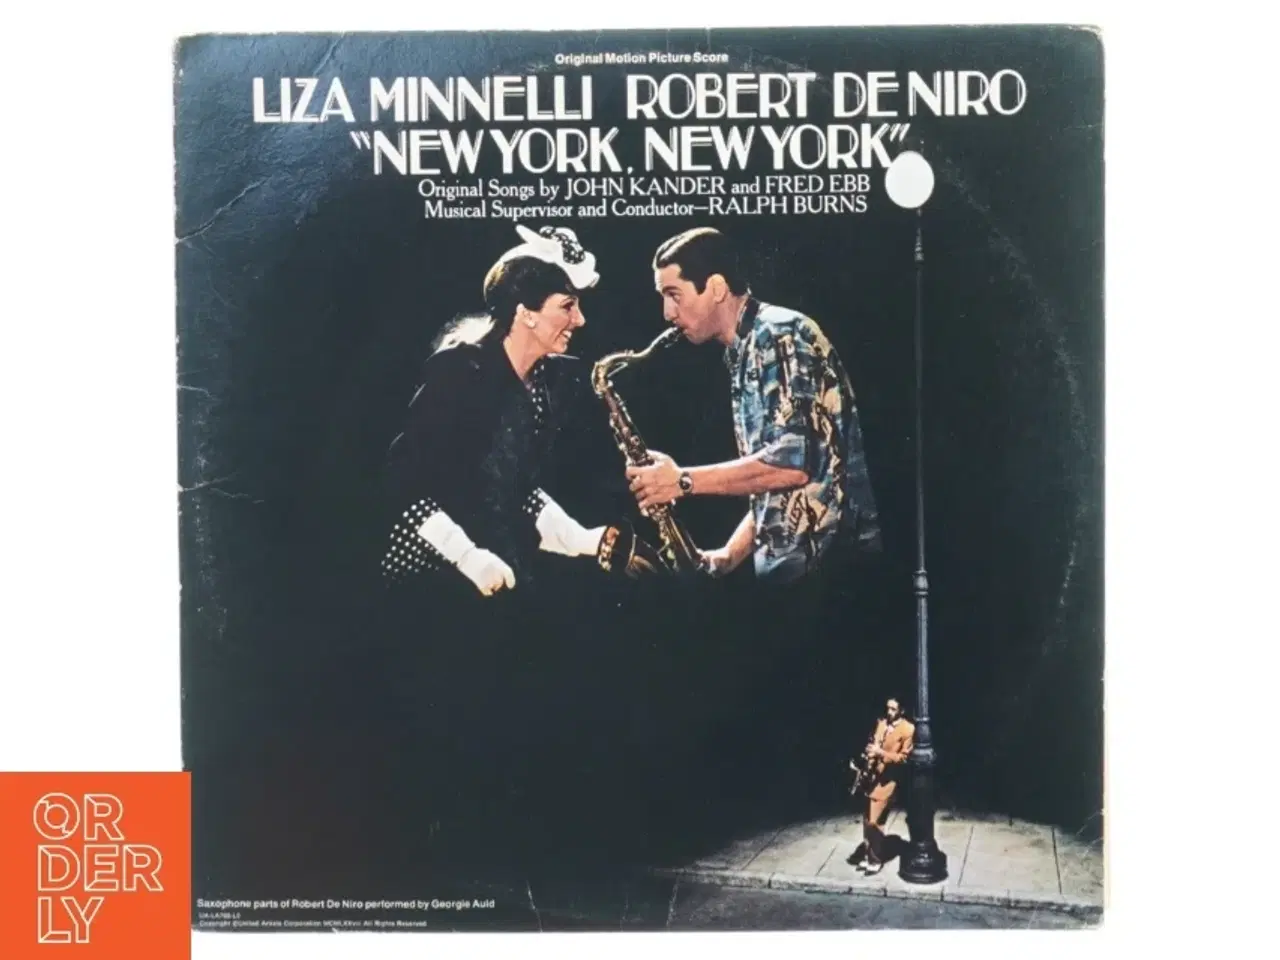 Billede 1 - Liza Minnelli & Robert de Niro - “New york New york”, United Artist (str. 30 cm)